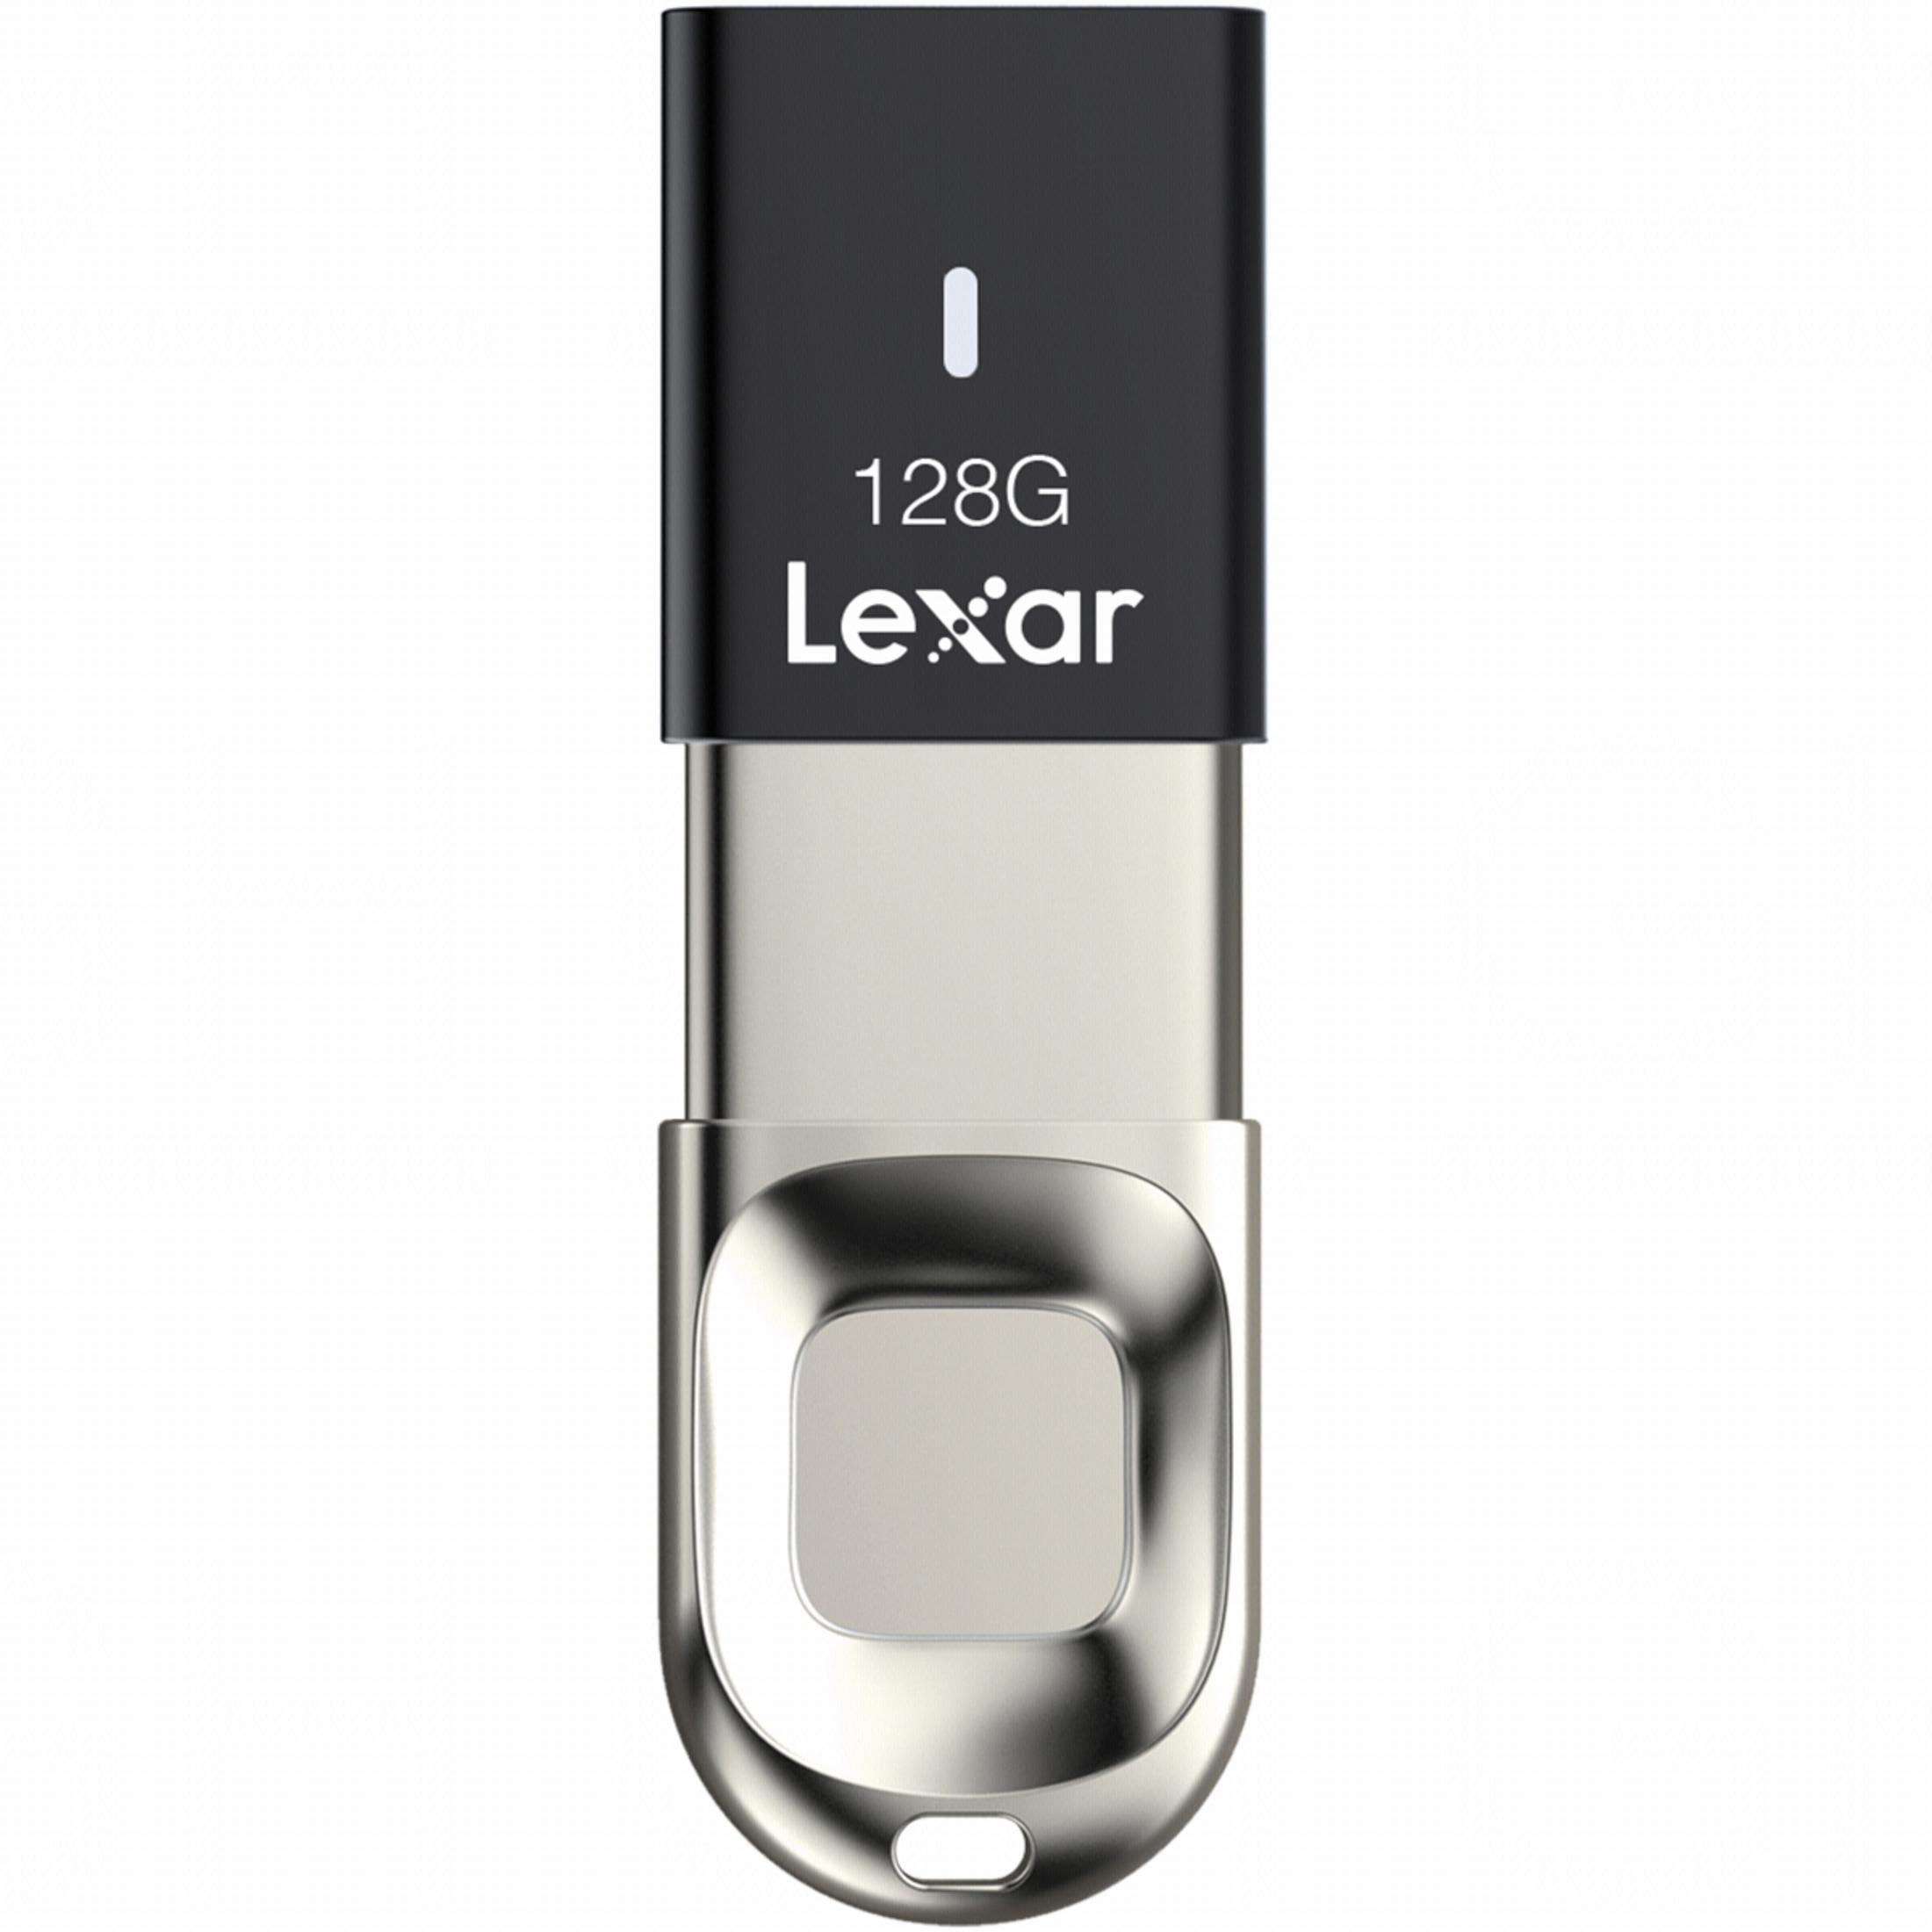 128GB F35 GB) 128 (Schwarz/Silber, LEXAR LJDF35-128BBK USB-Stick DRIVE USB 3.0 FLASH